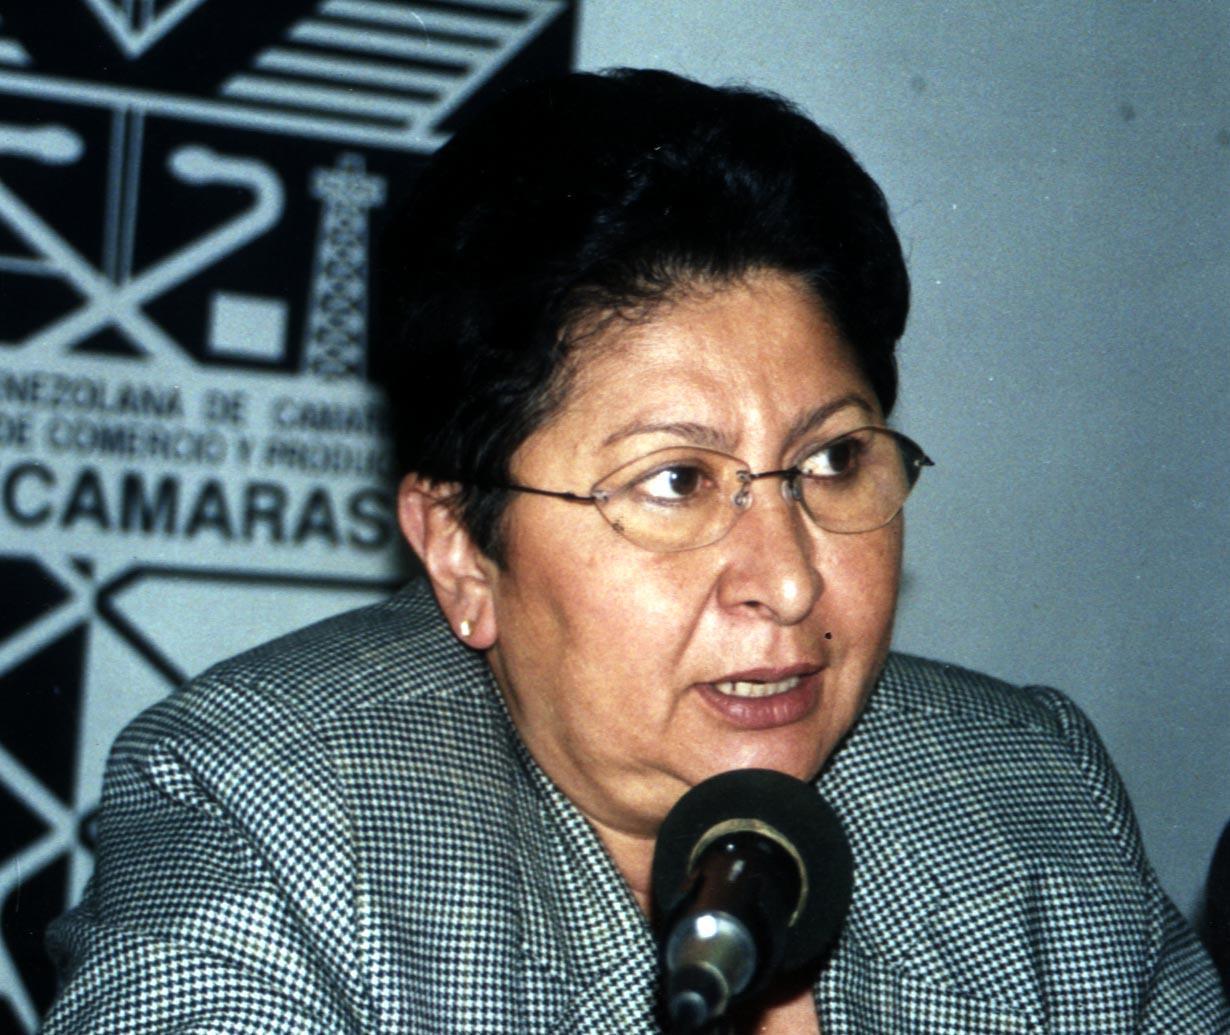 Albis Muñoz